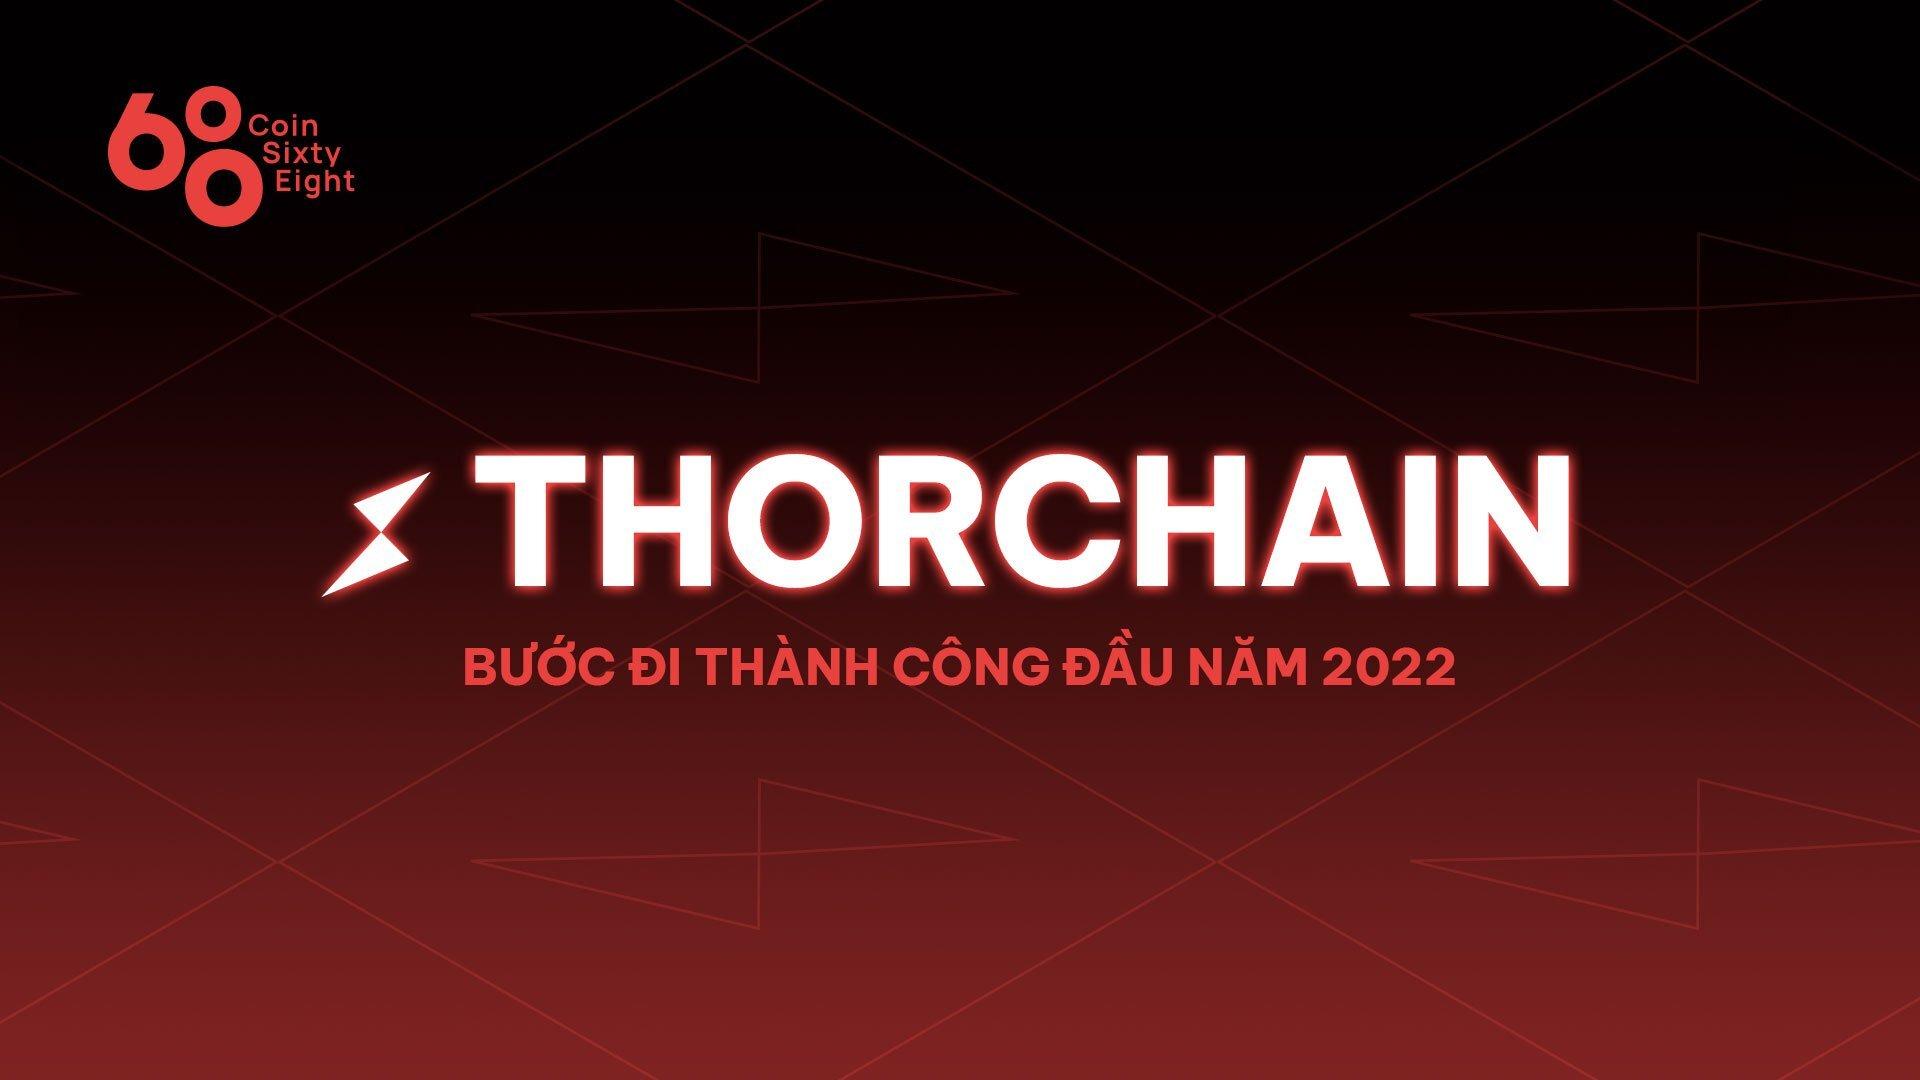 tang-truong-tvl-buoc-di-thanh-cong-cua-thorchain-dau-2022